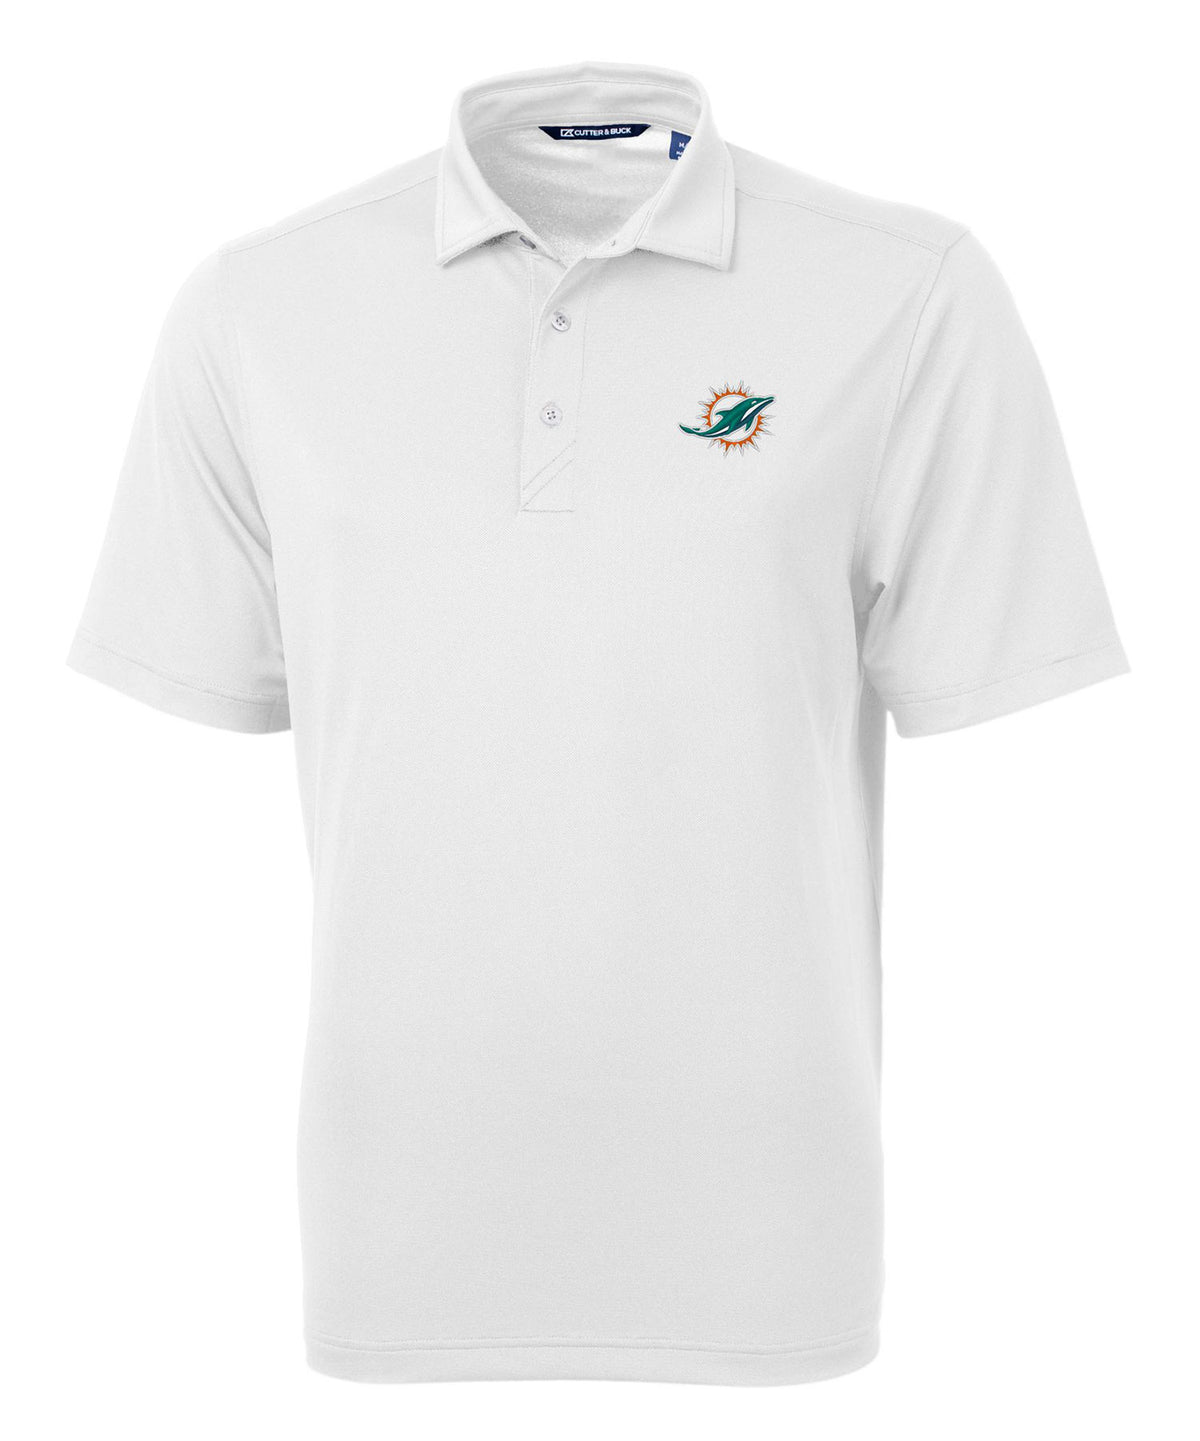 Cutter & Buck Miami Dolphins Short Sleeve Polo Knit Shirt, Men's Big & Tall